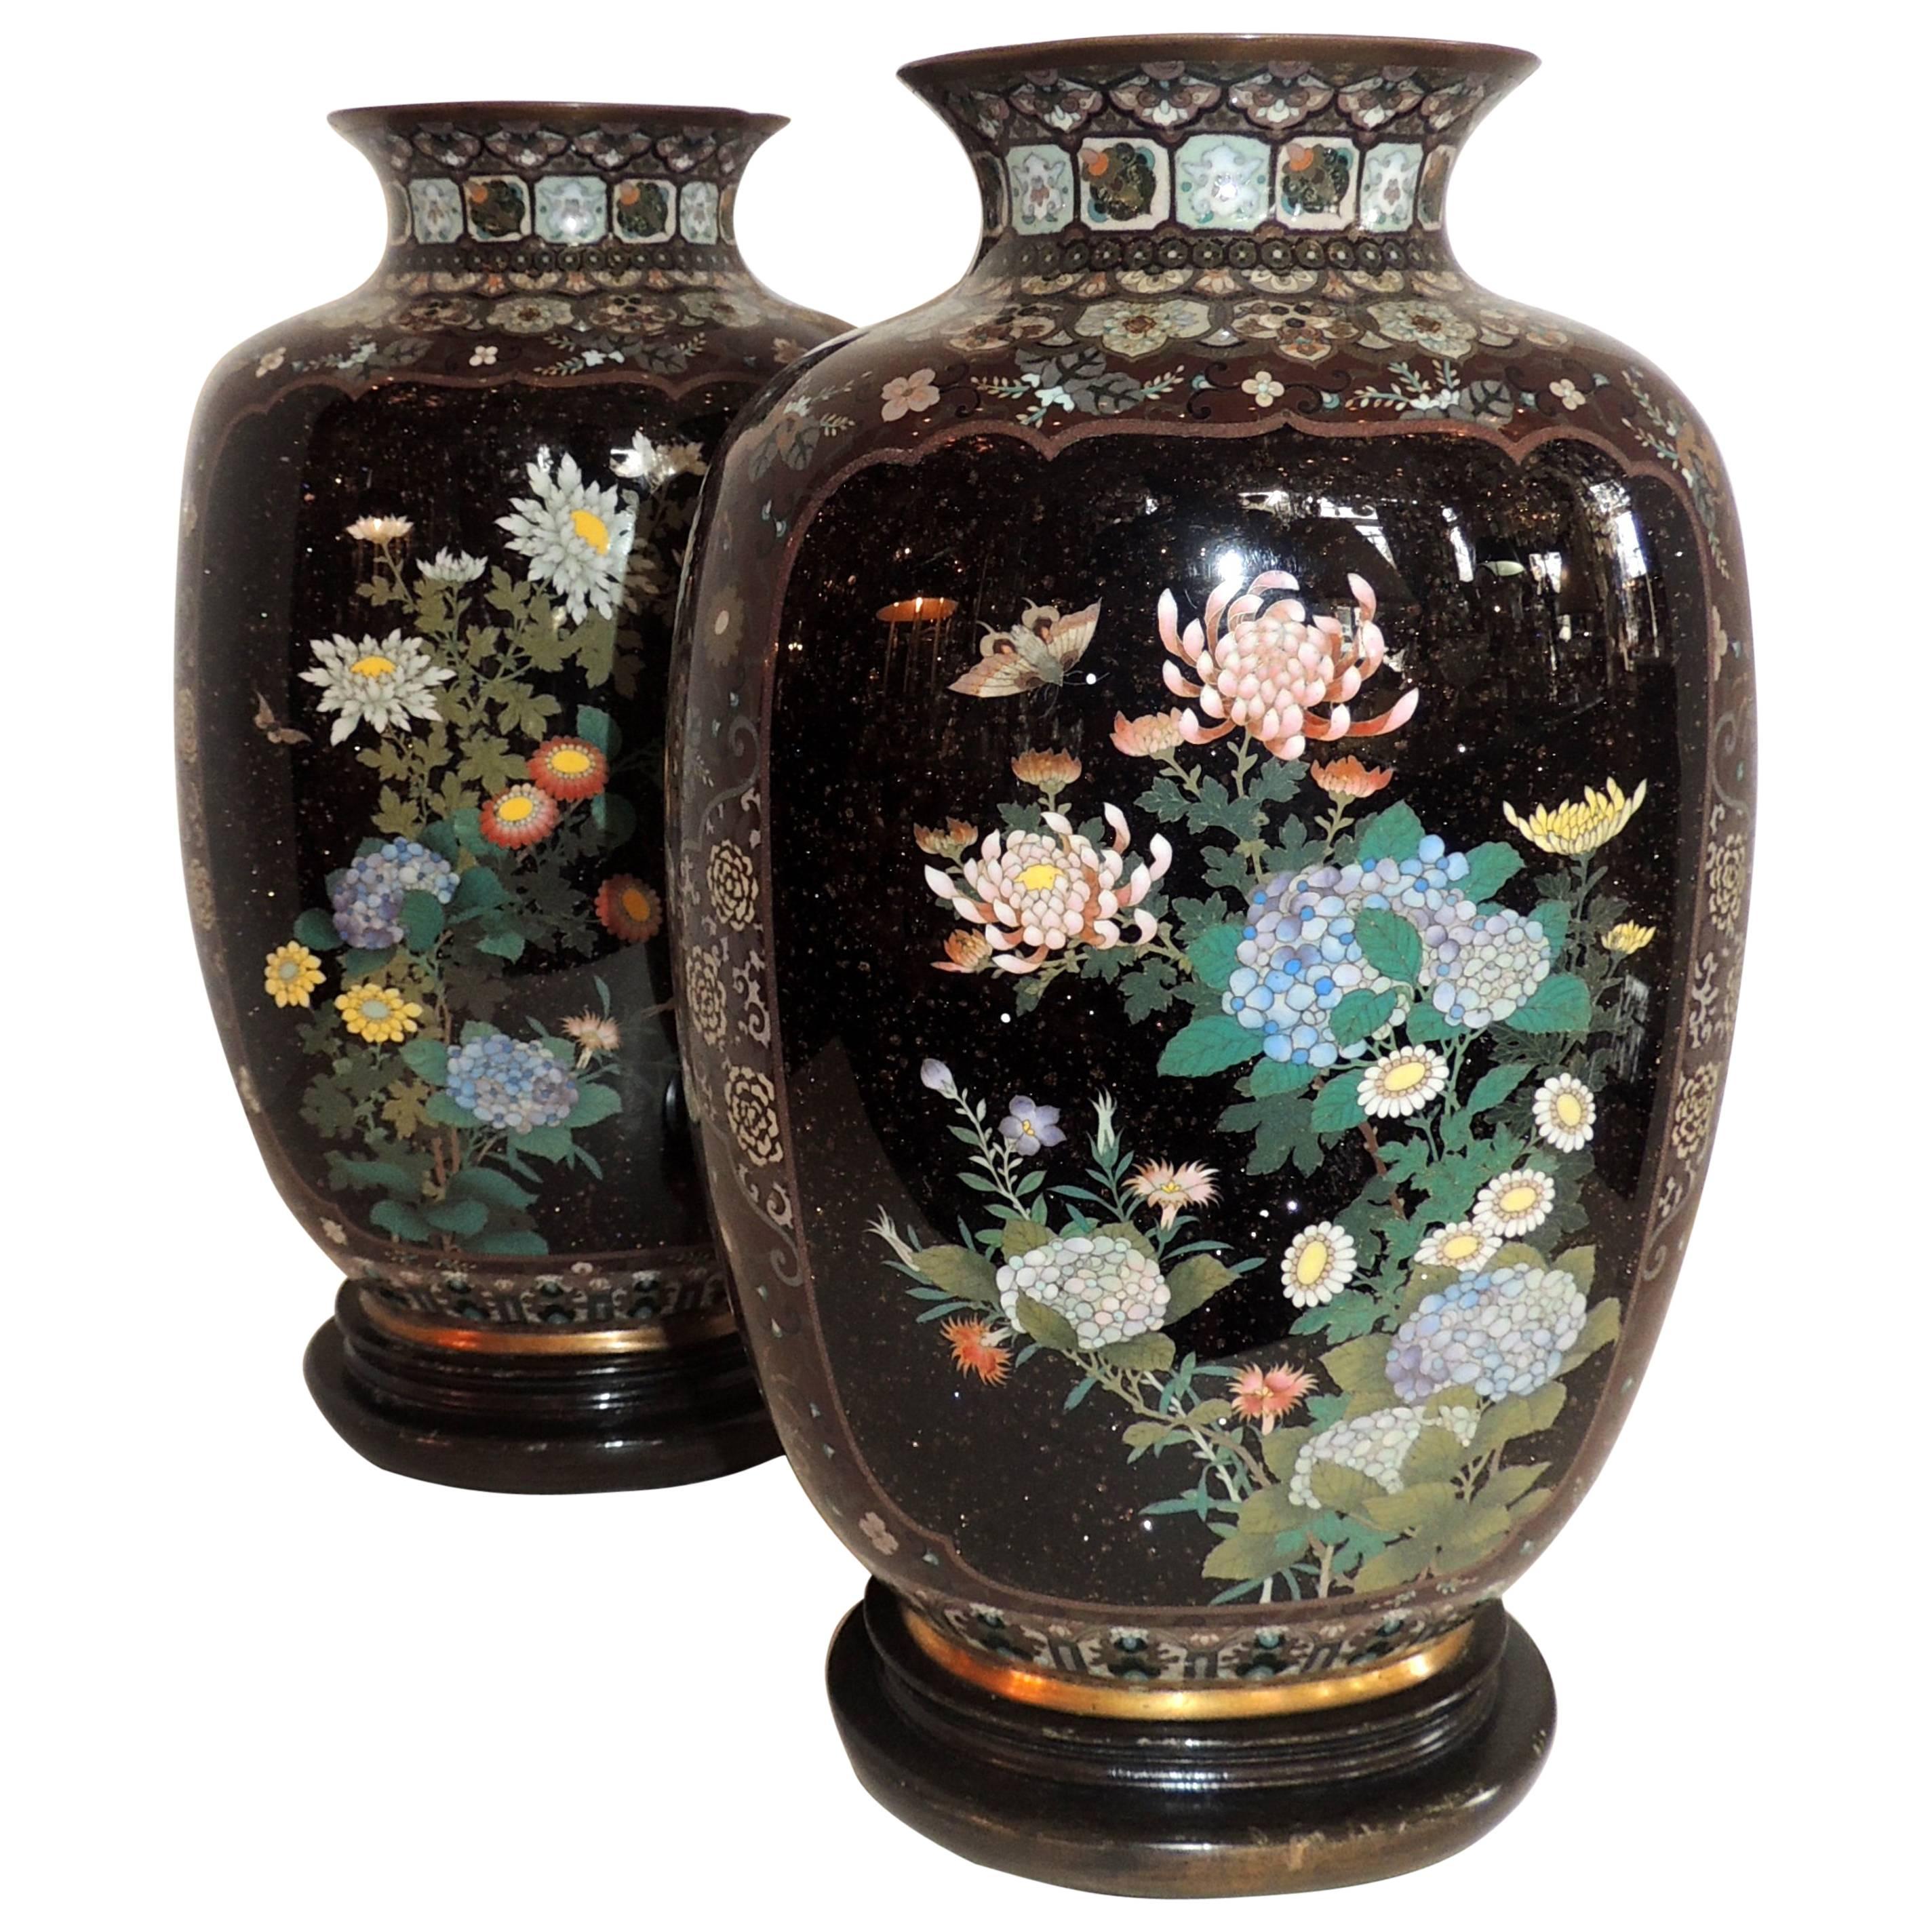 Wonderful Pair of Fine Japanese Meiji Cloisonne Enameled Vases Urn Form Lamps